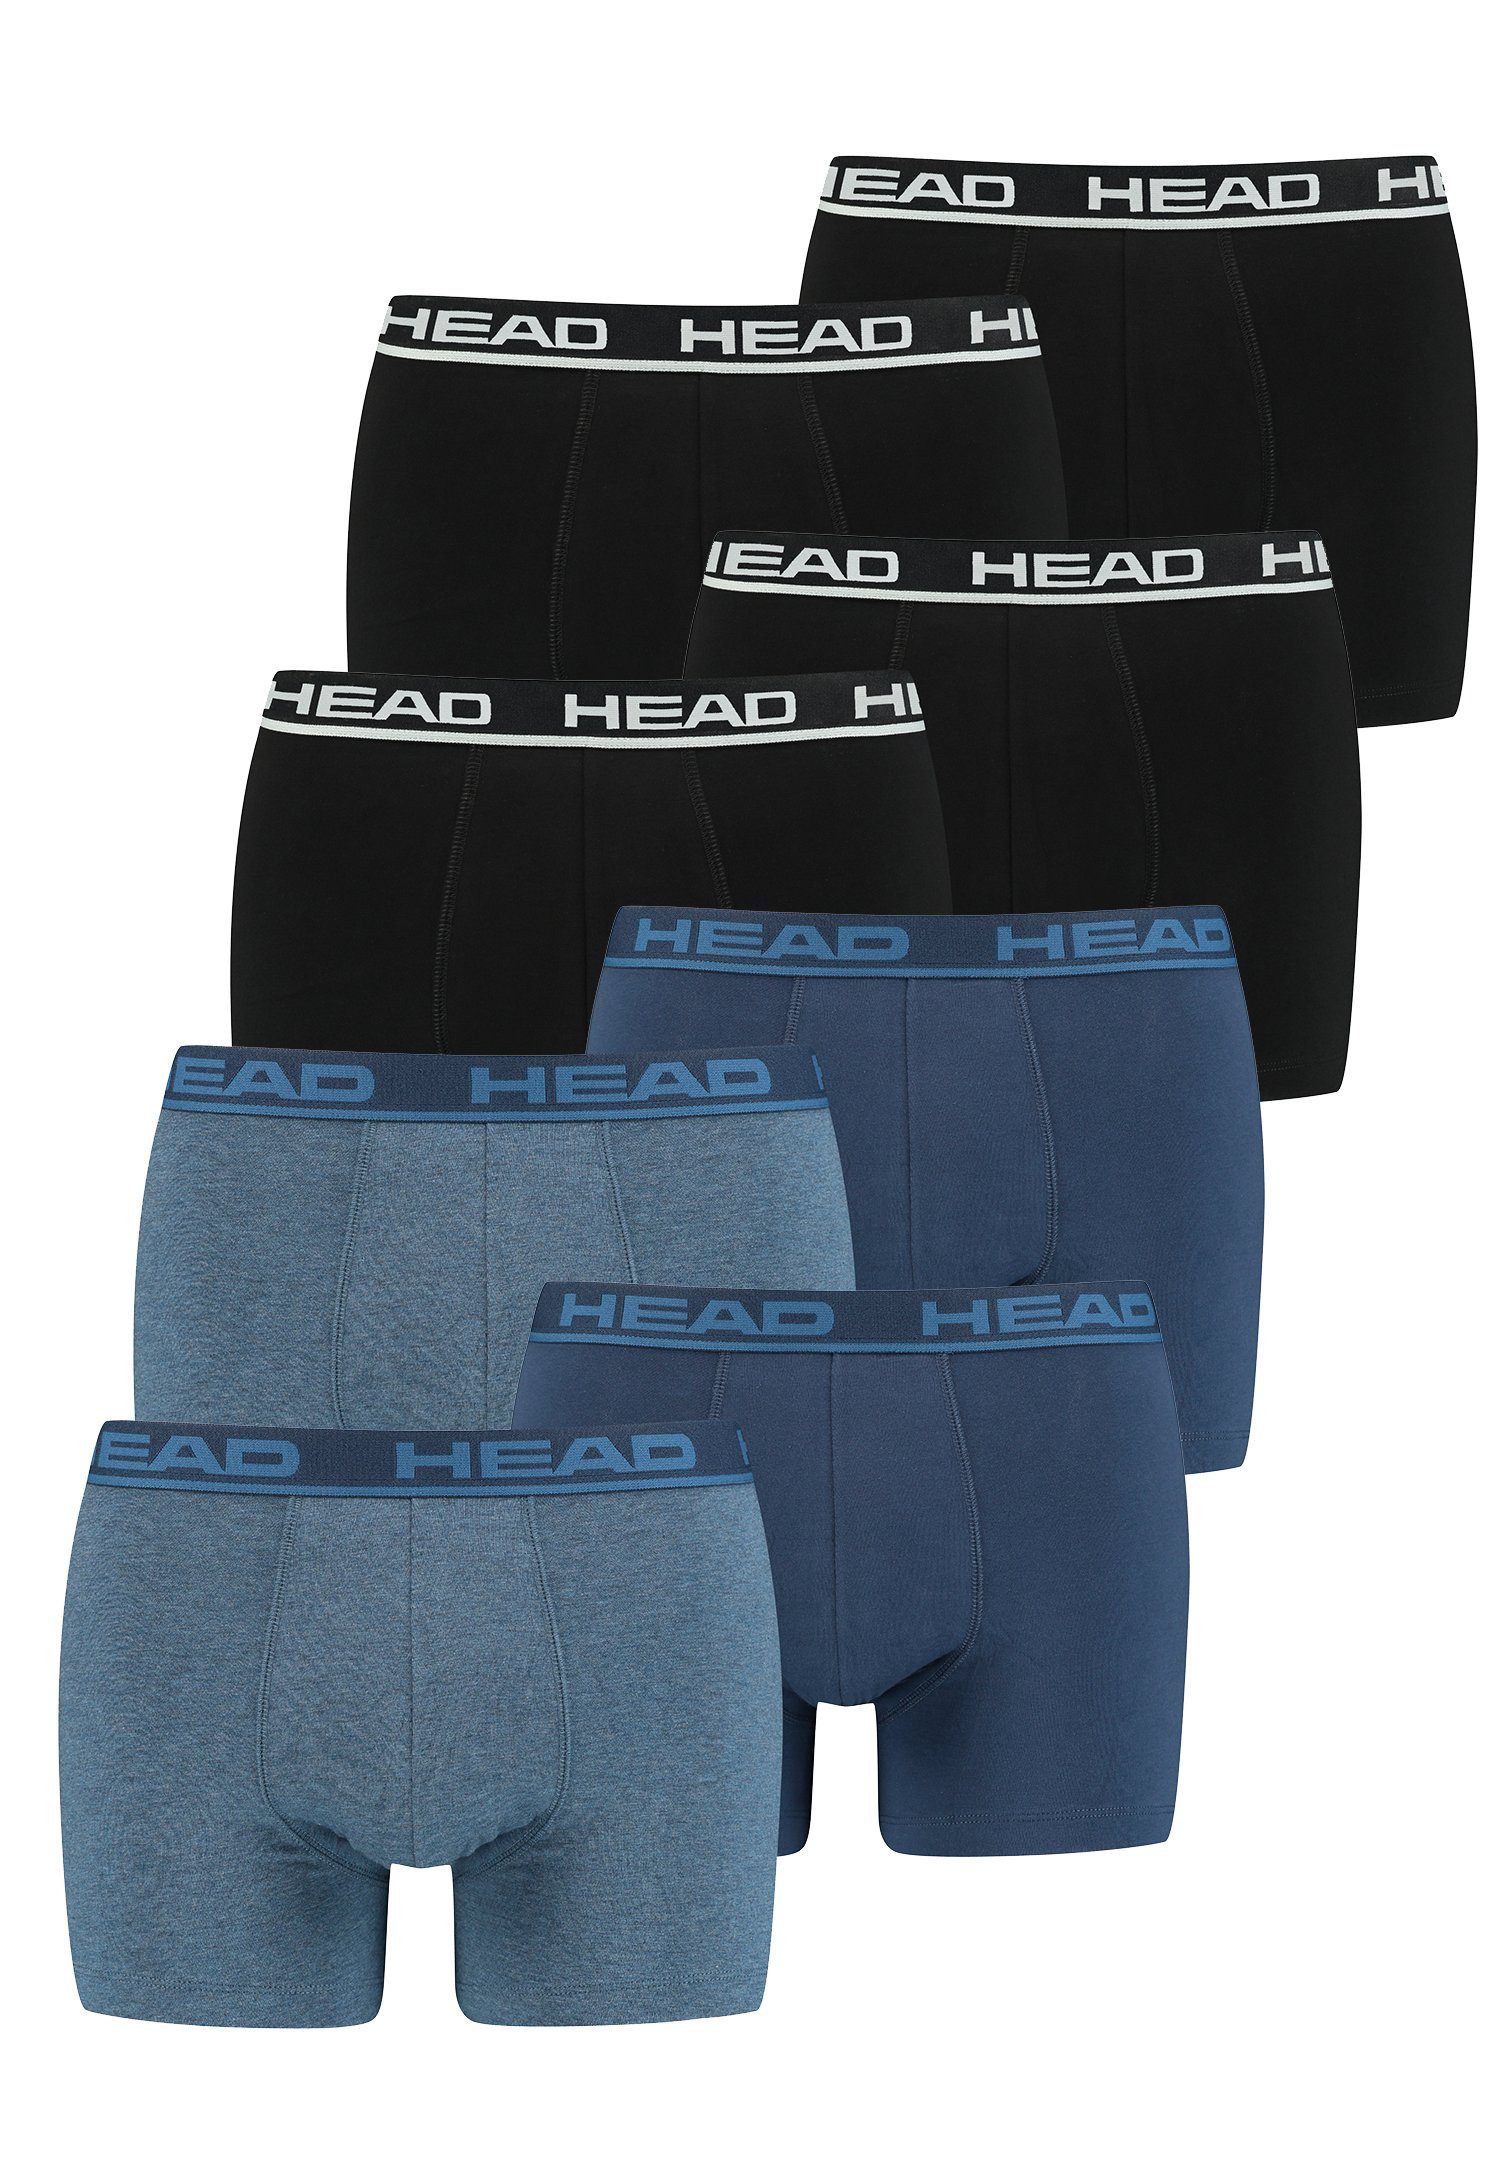 Head Boxershorts (Spar-Set, Heaven Basic Black/Blue Head 8-St., 8P 8er-Pack) Boxer